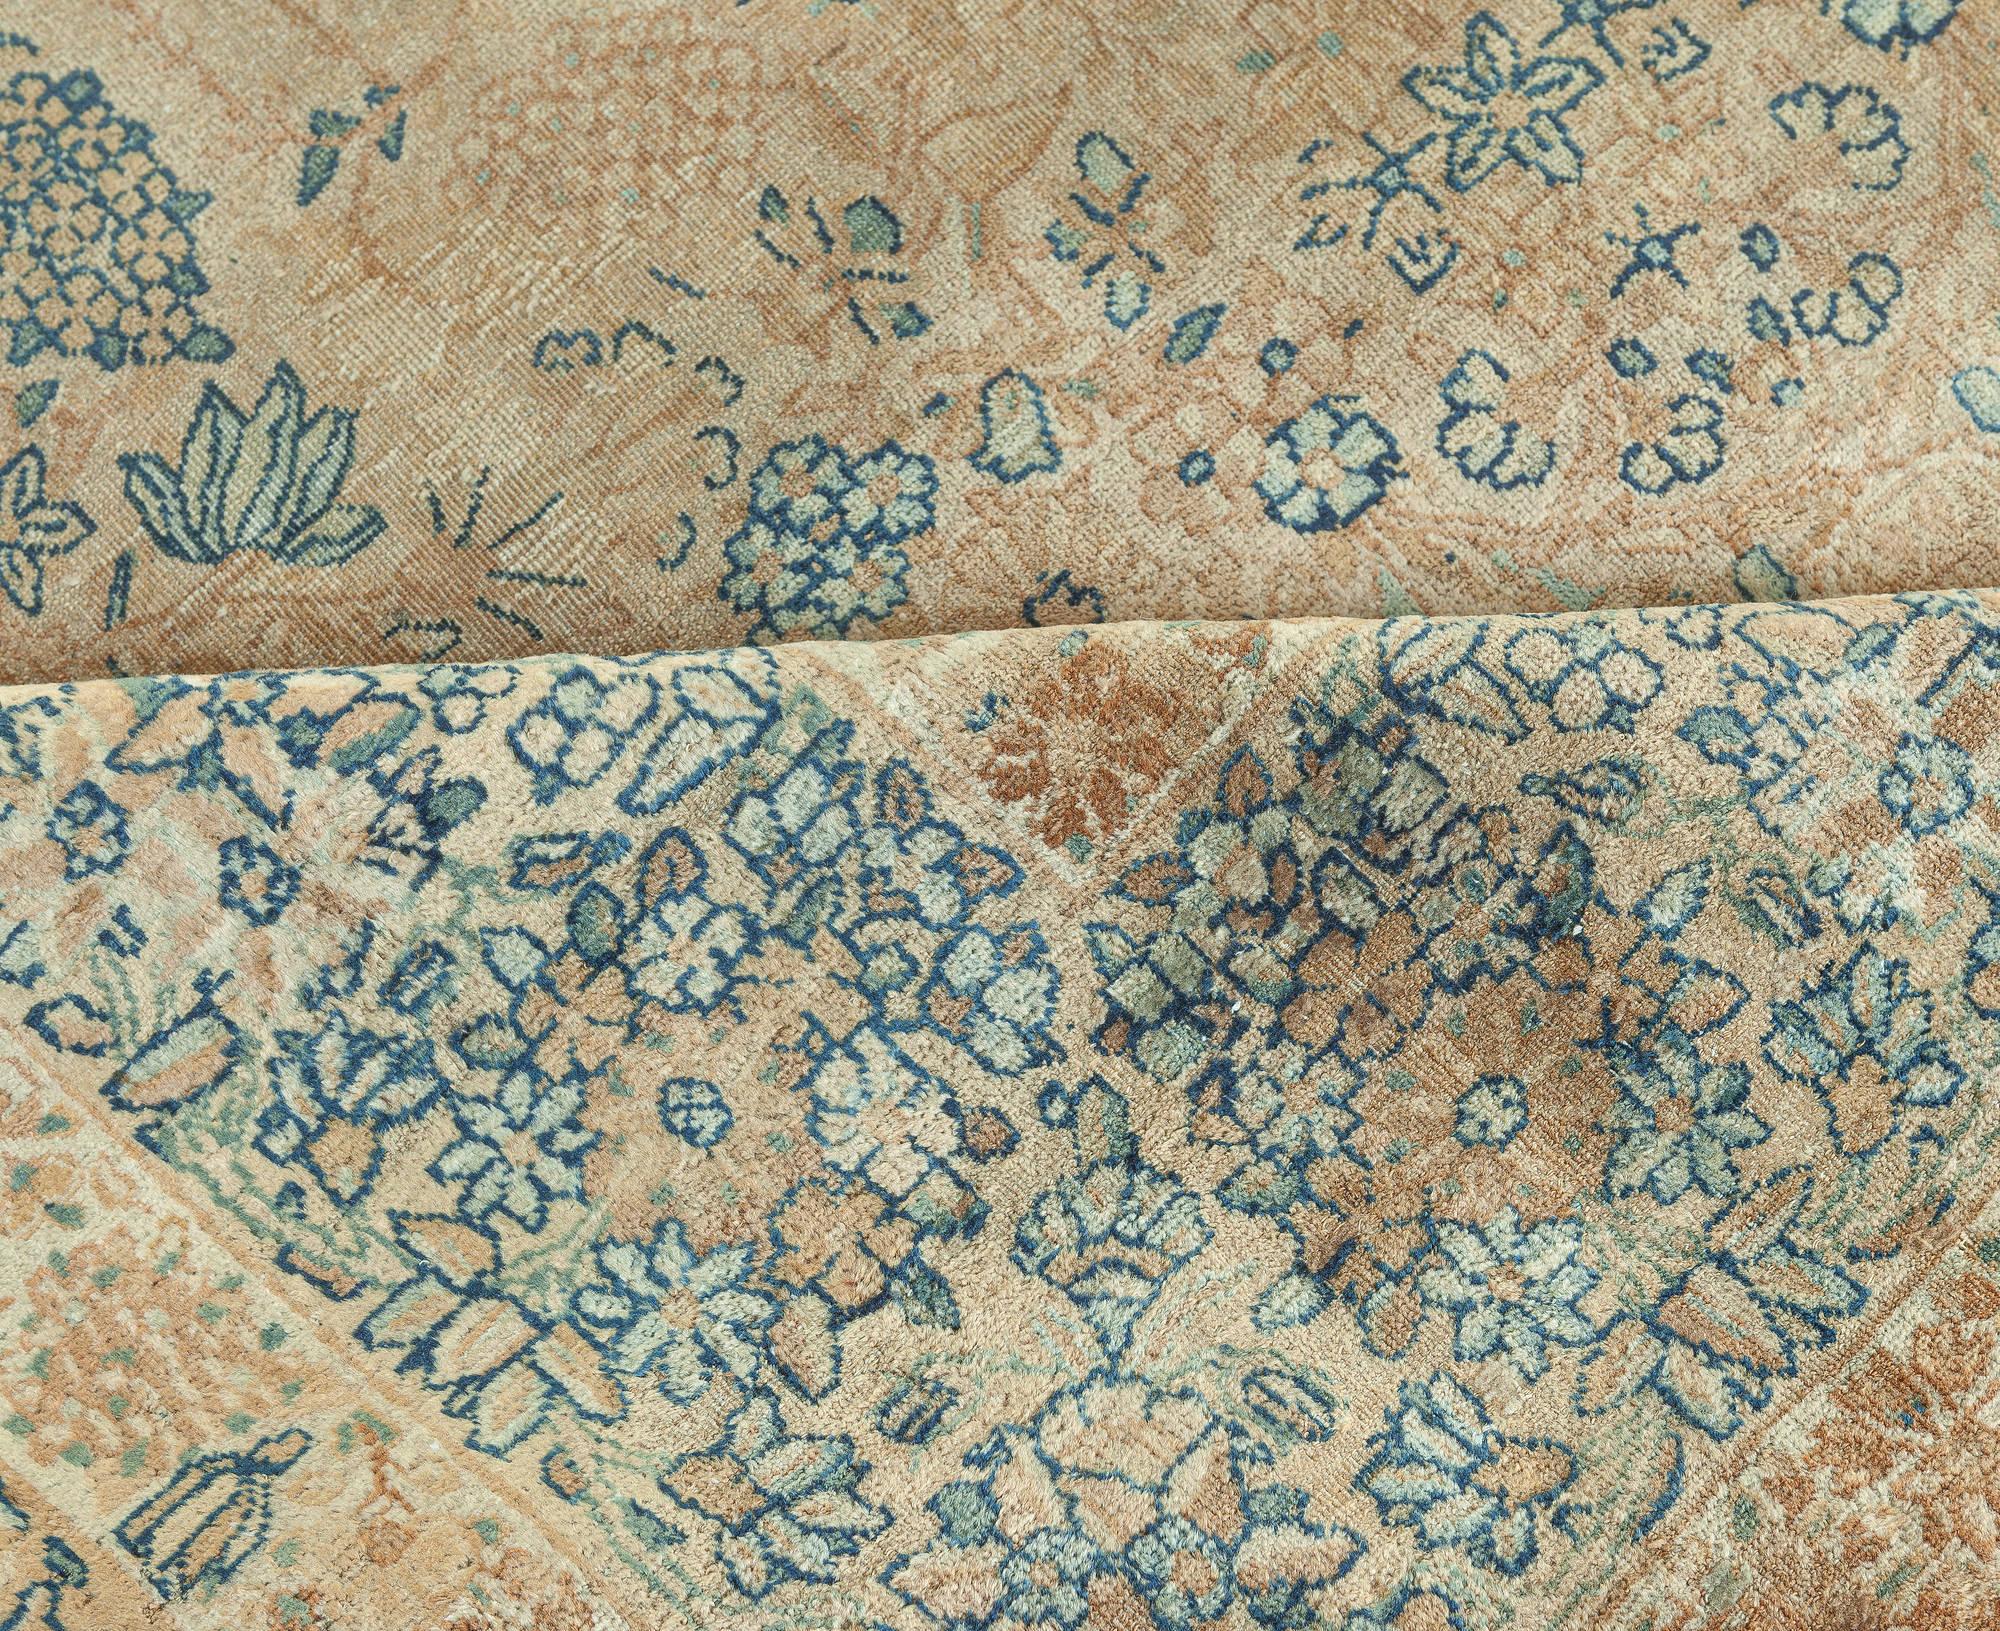 Antique Persian Kirman Beige, Blue, Green Handmade Wool Rug
Size: 9'10